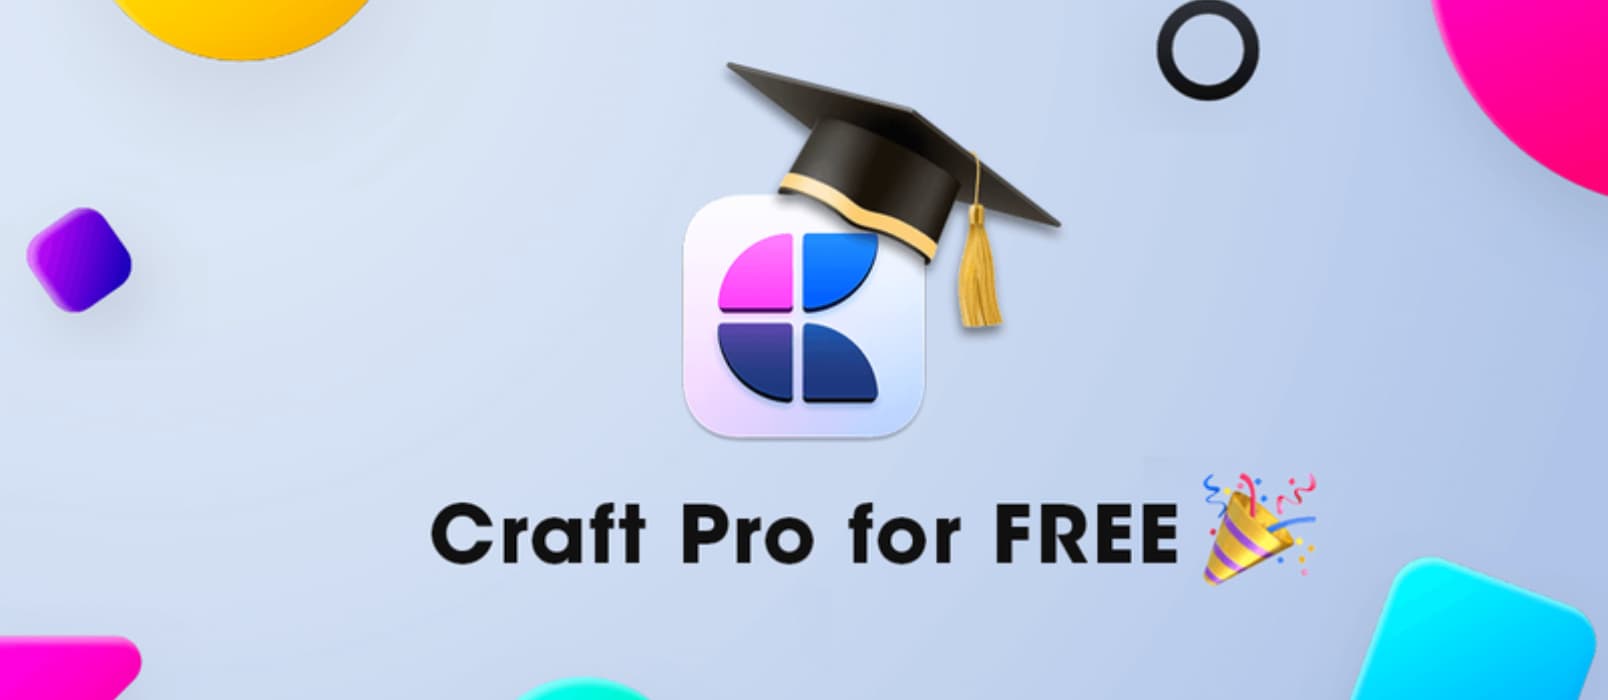 Craft - 设计精美且功能强大的 Apple 笔记软件 | Pro 版教育优惠限时免费